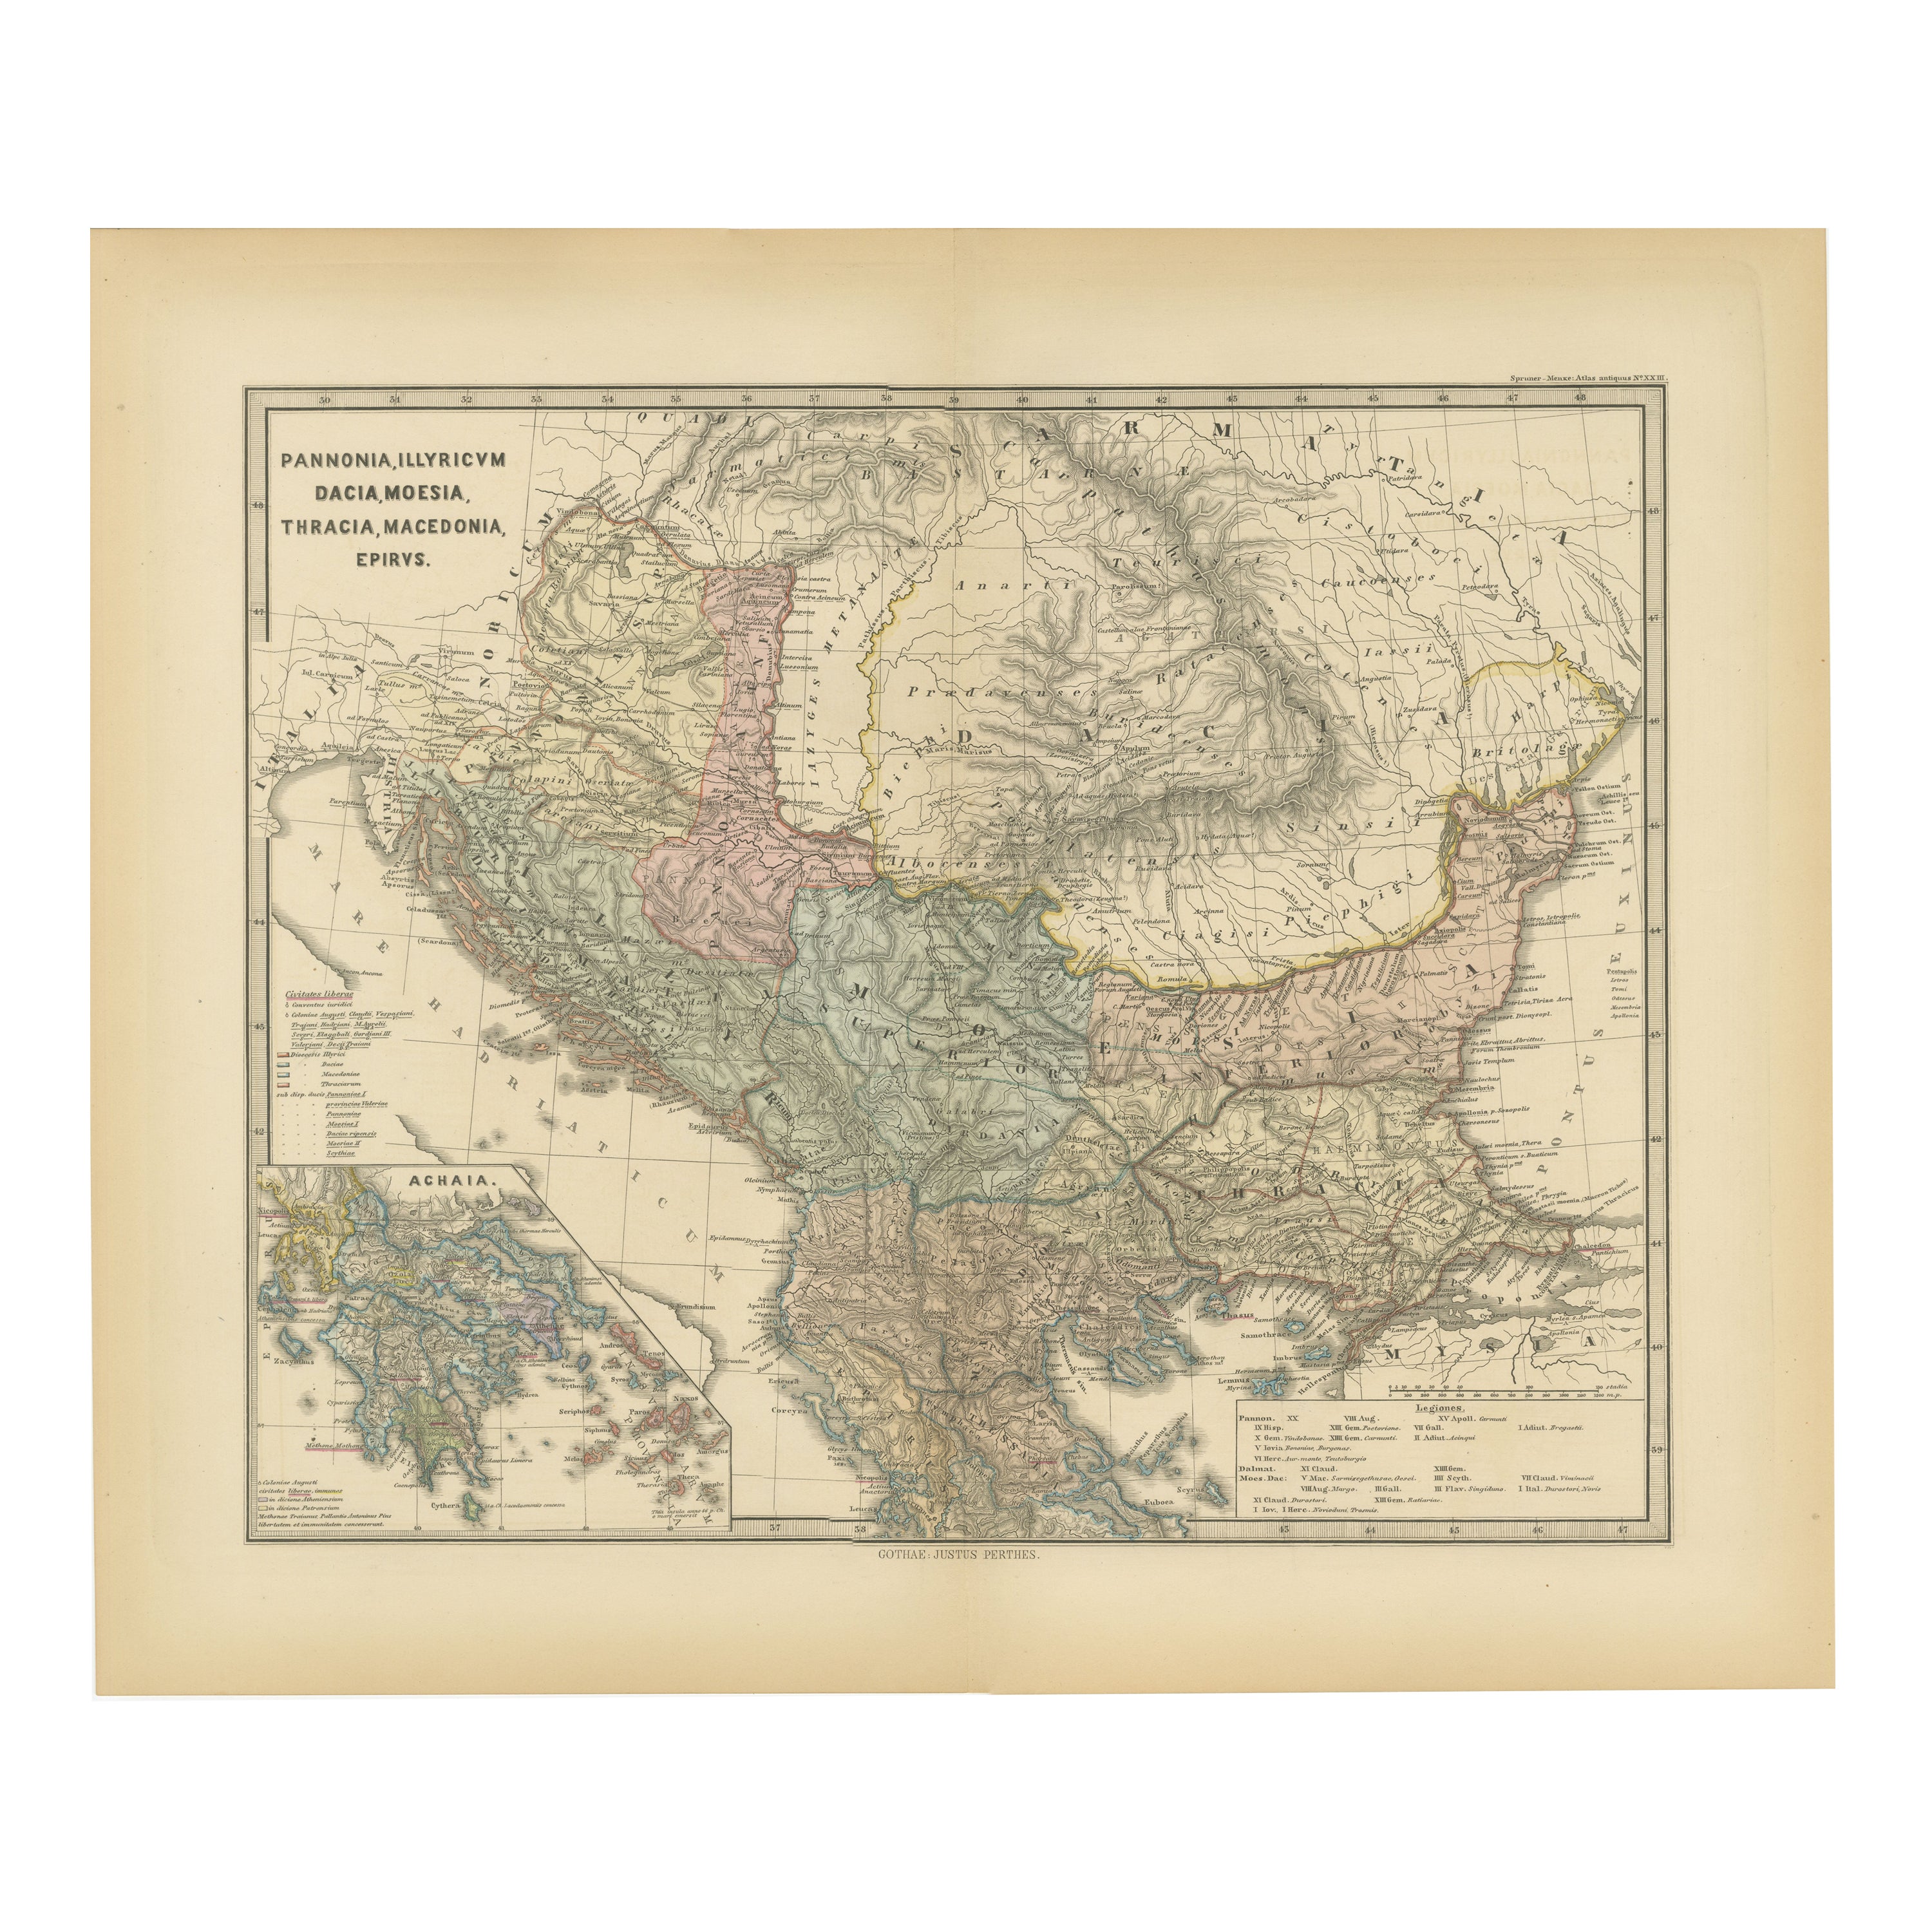 Roman Balkans: Pannonia, Illyricum, Dacia, Moesia, Thracia, Macedonia and Thyris For Sale